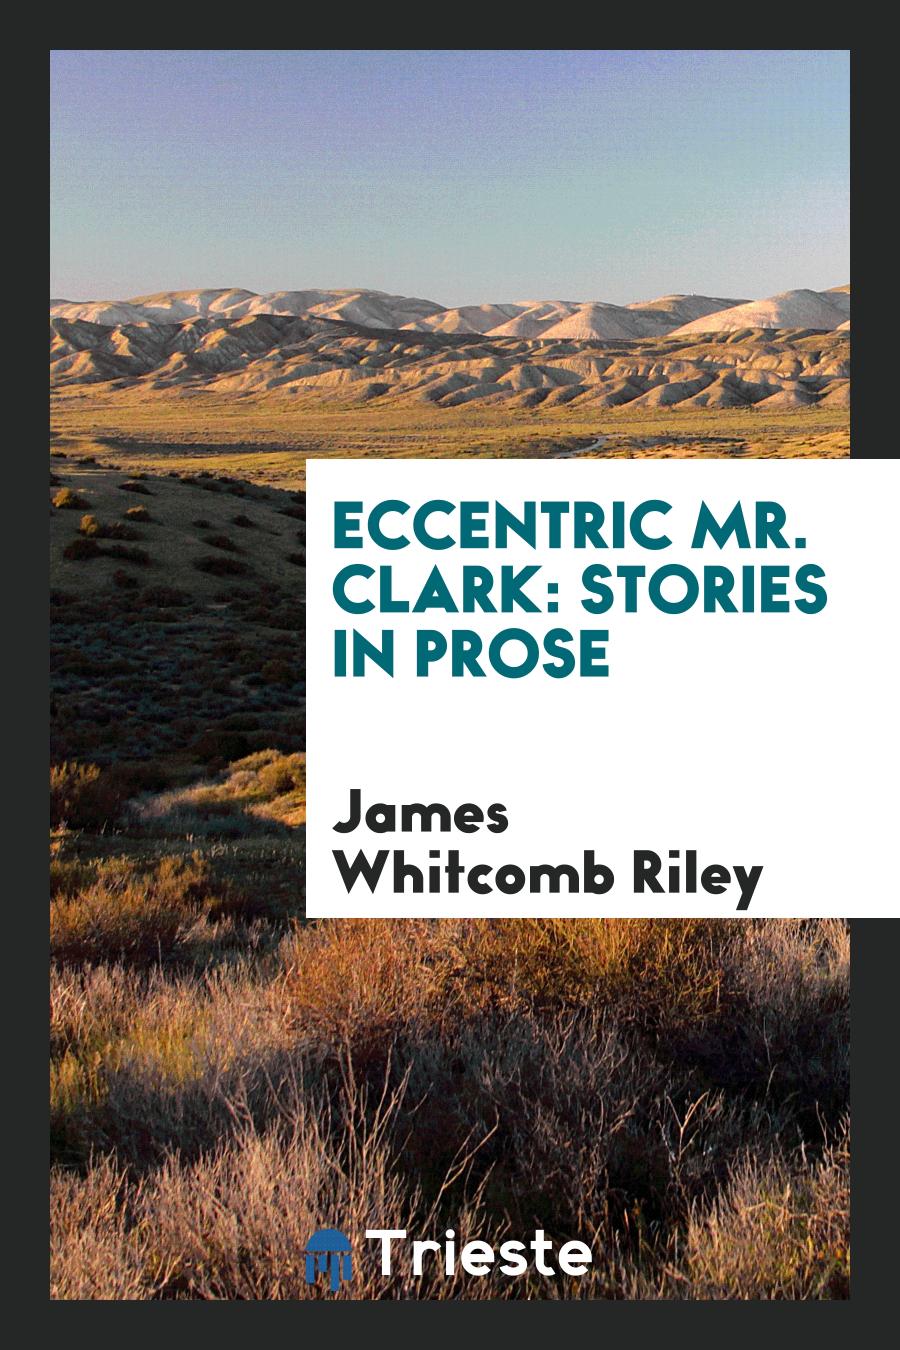 James Whitcomb Riley - Eccentric Mr. Clark: Stories in Prose